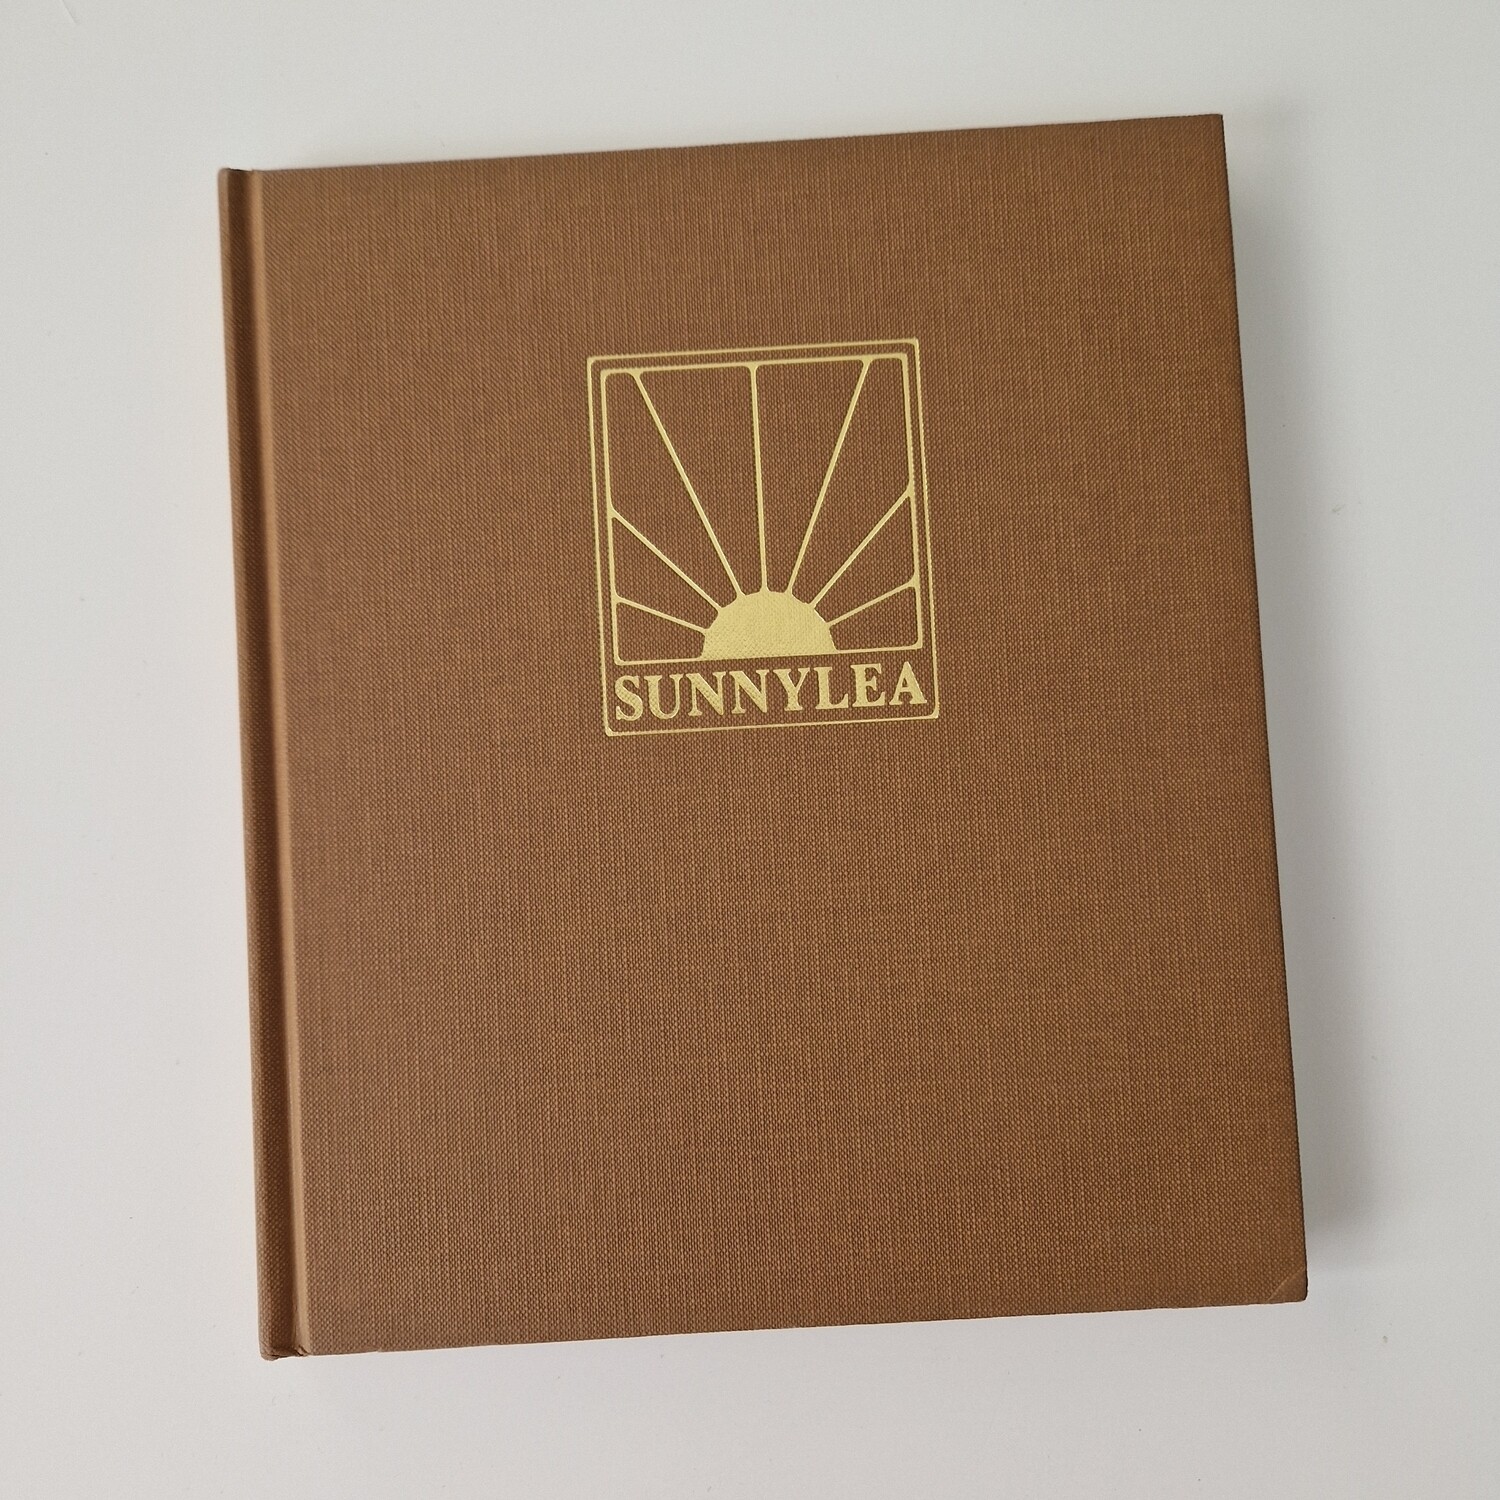 Sunnylea - 1920 sunburst, home